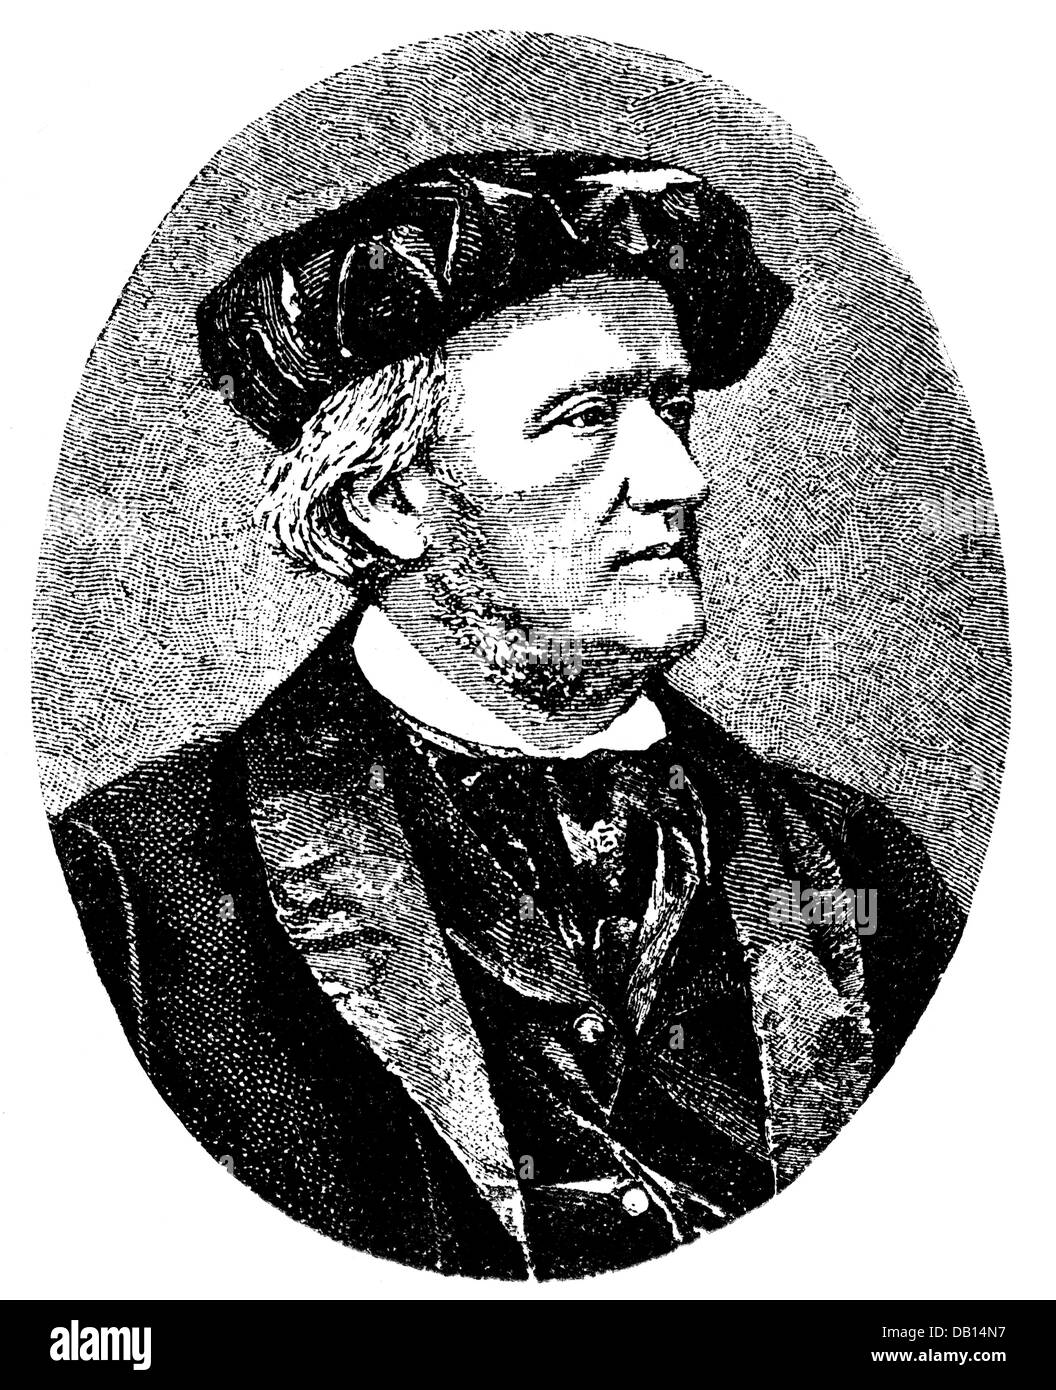 Wagner, Richard, 22.5.1813 - 13.2.1883, German composer, portrait, wood engraving, 19th century, Stock Photo